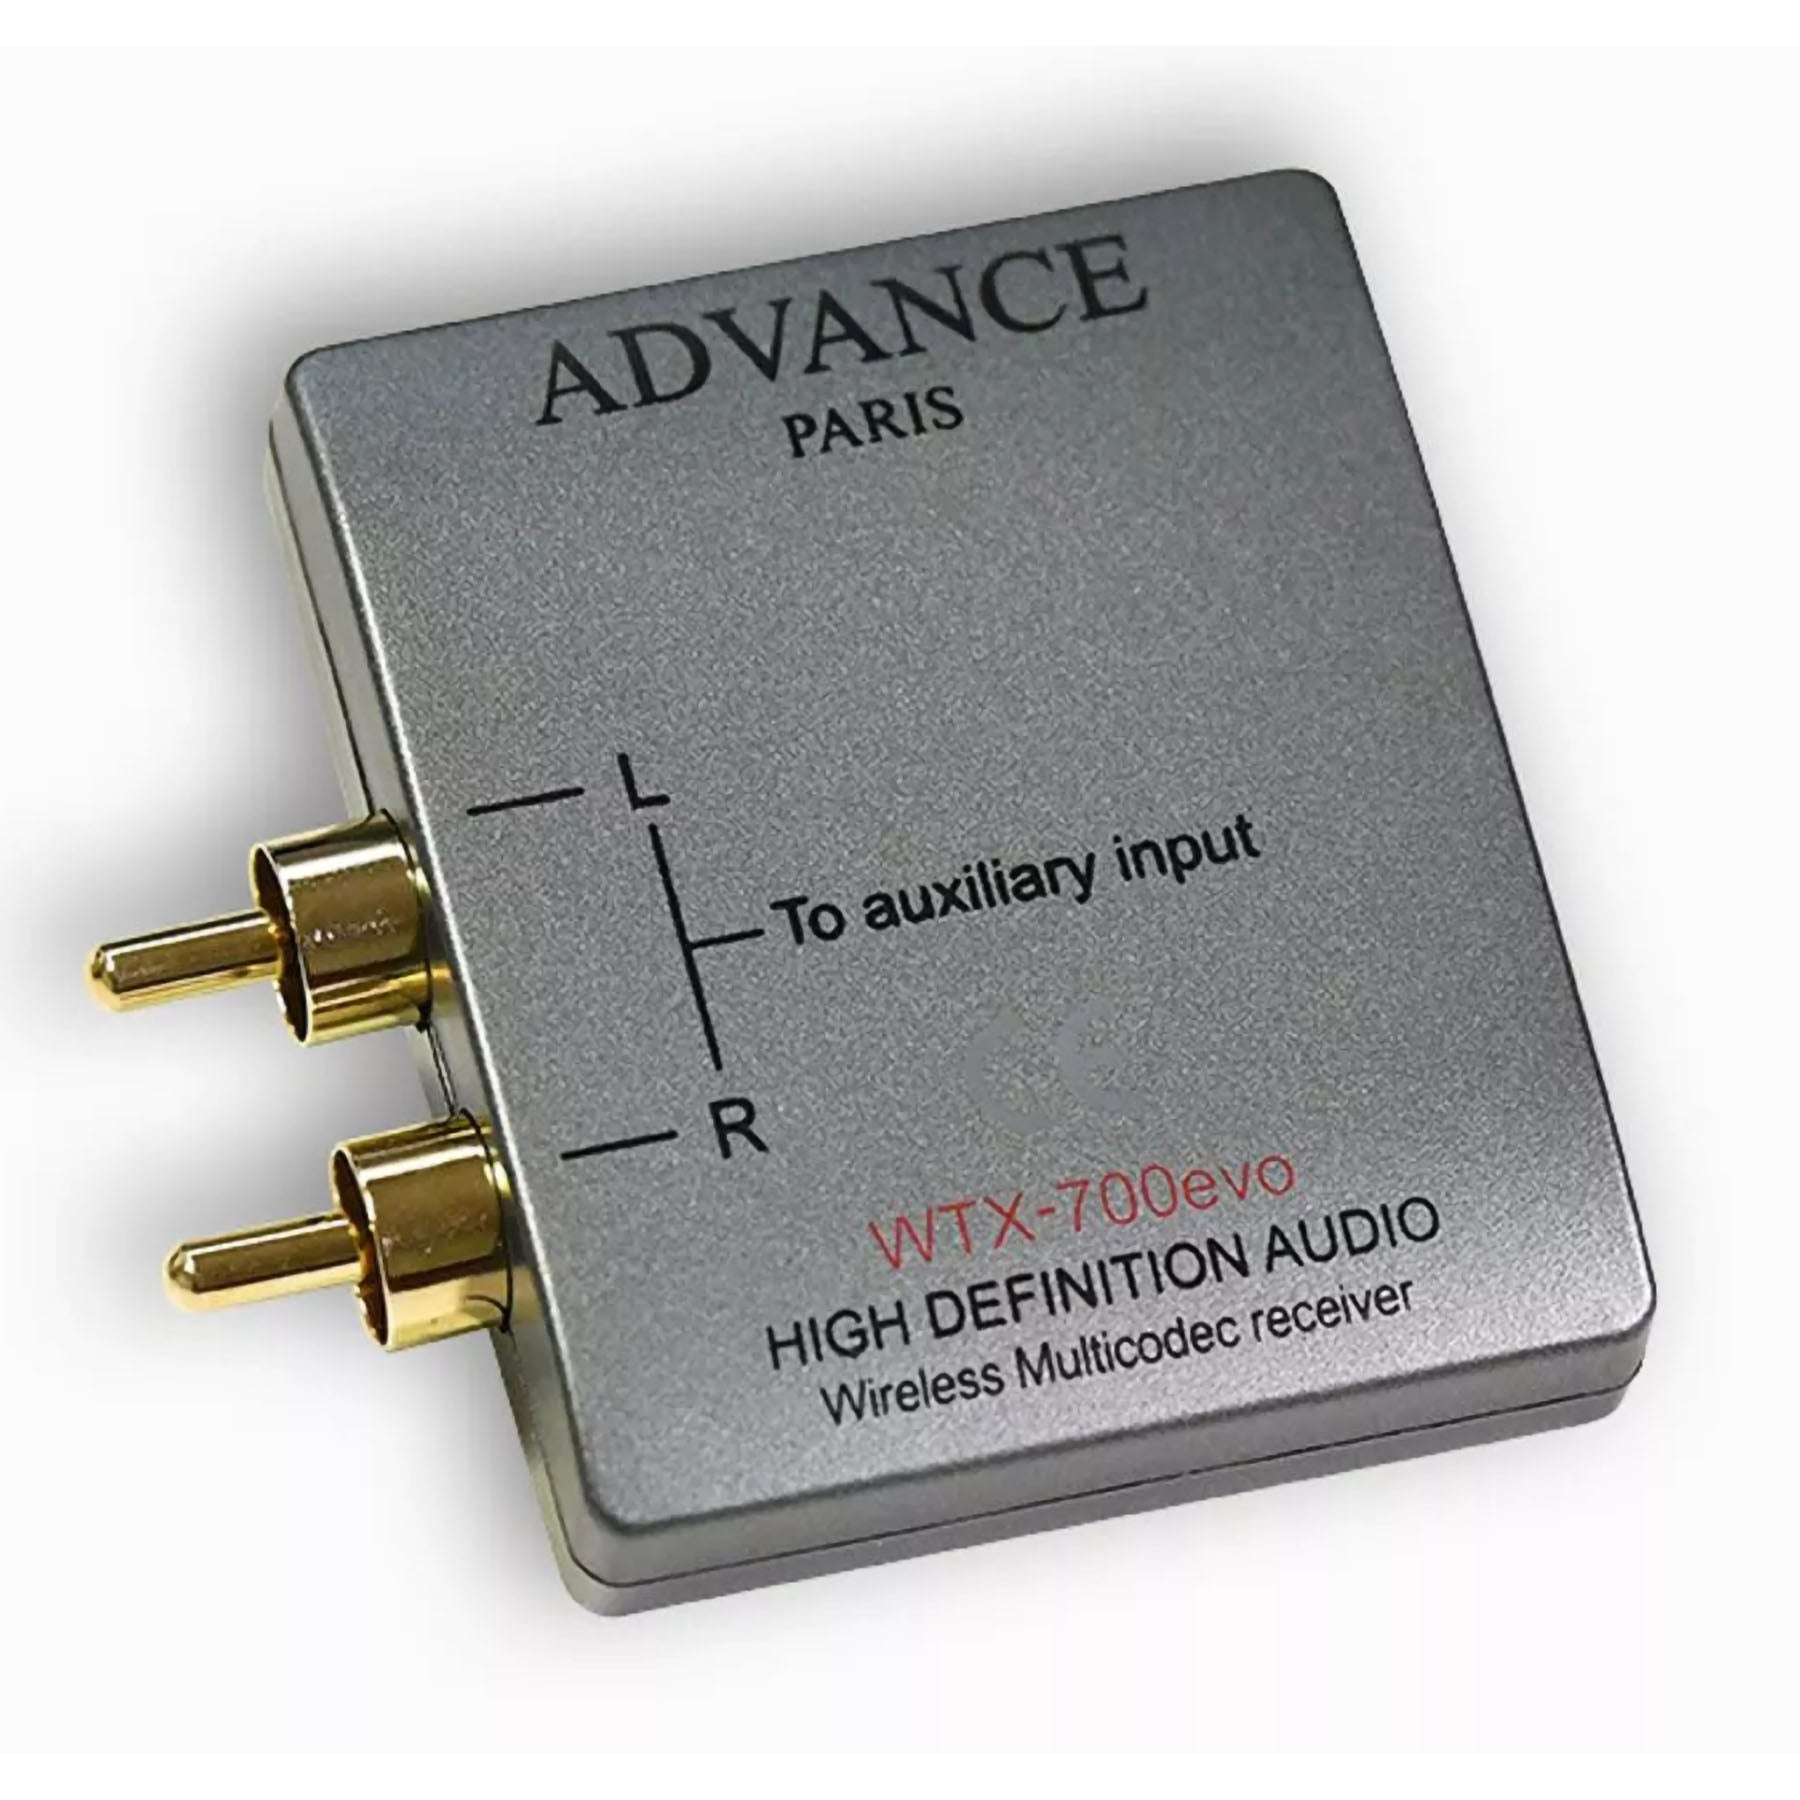 Advance Paris WTX-700 EVO HD Bluetooth Receiver